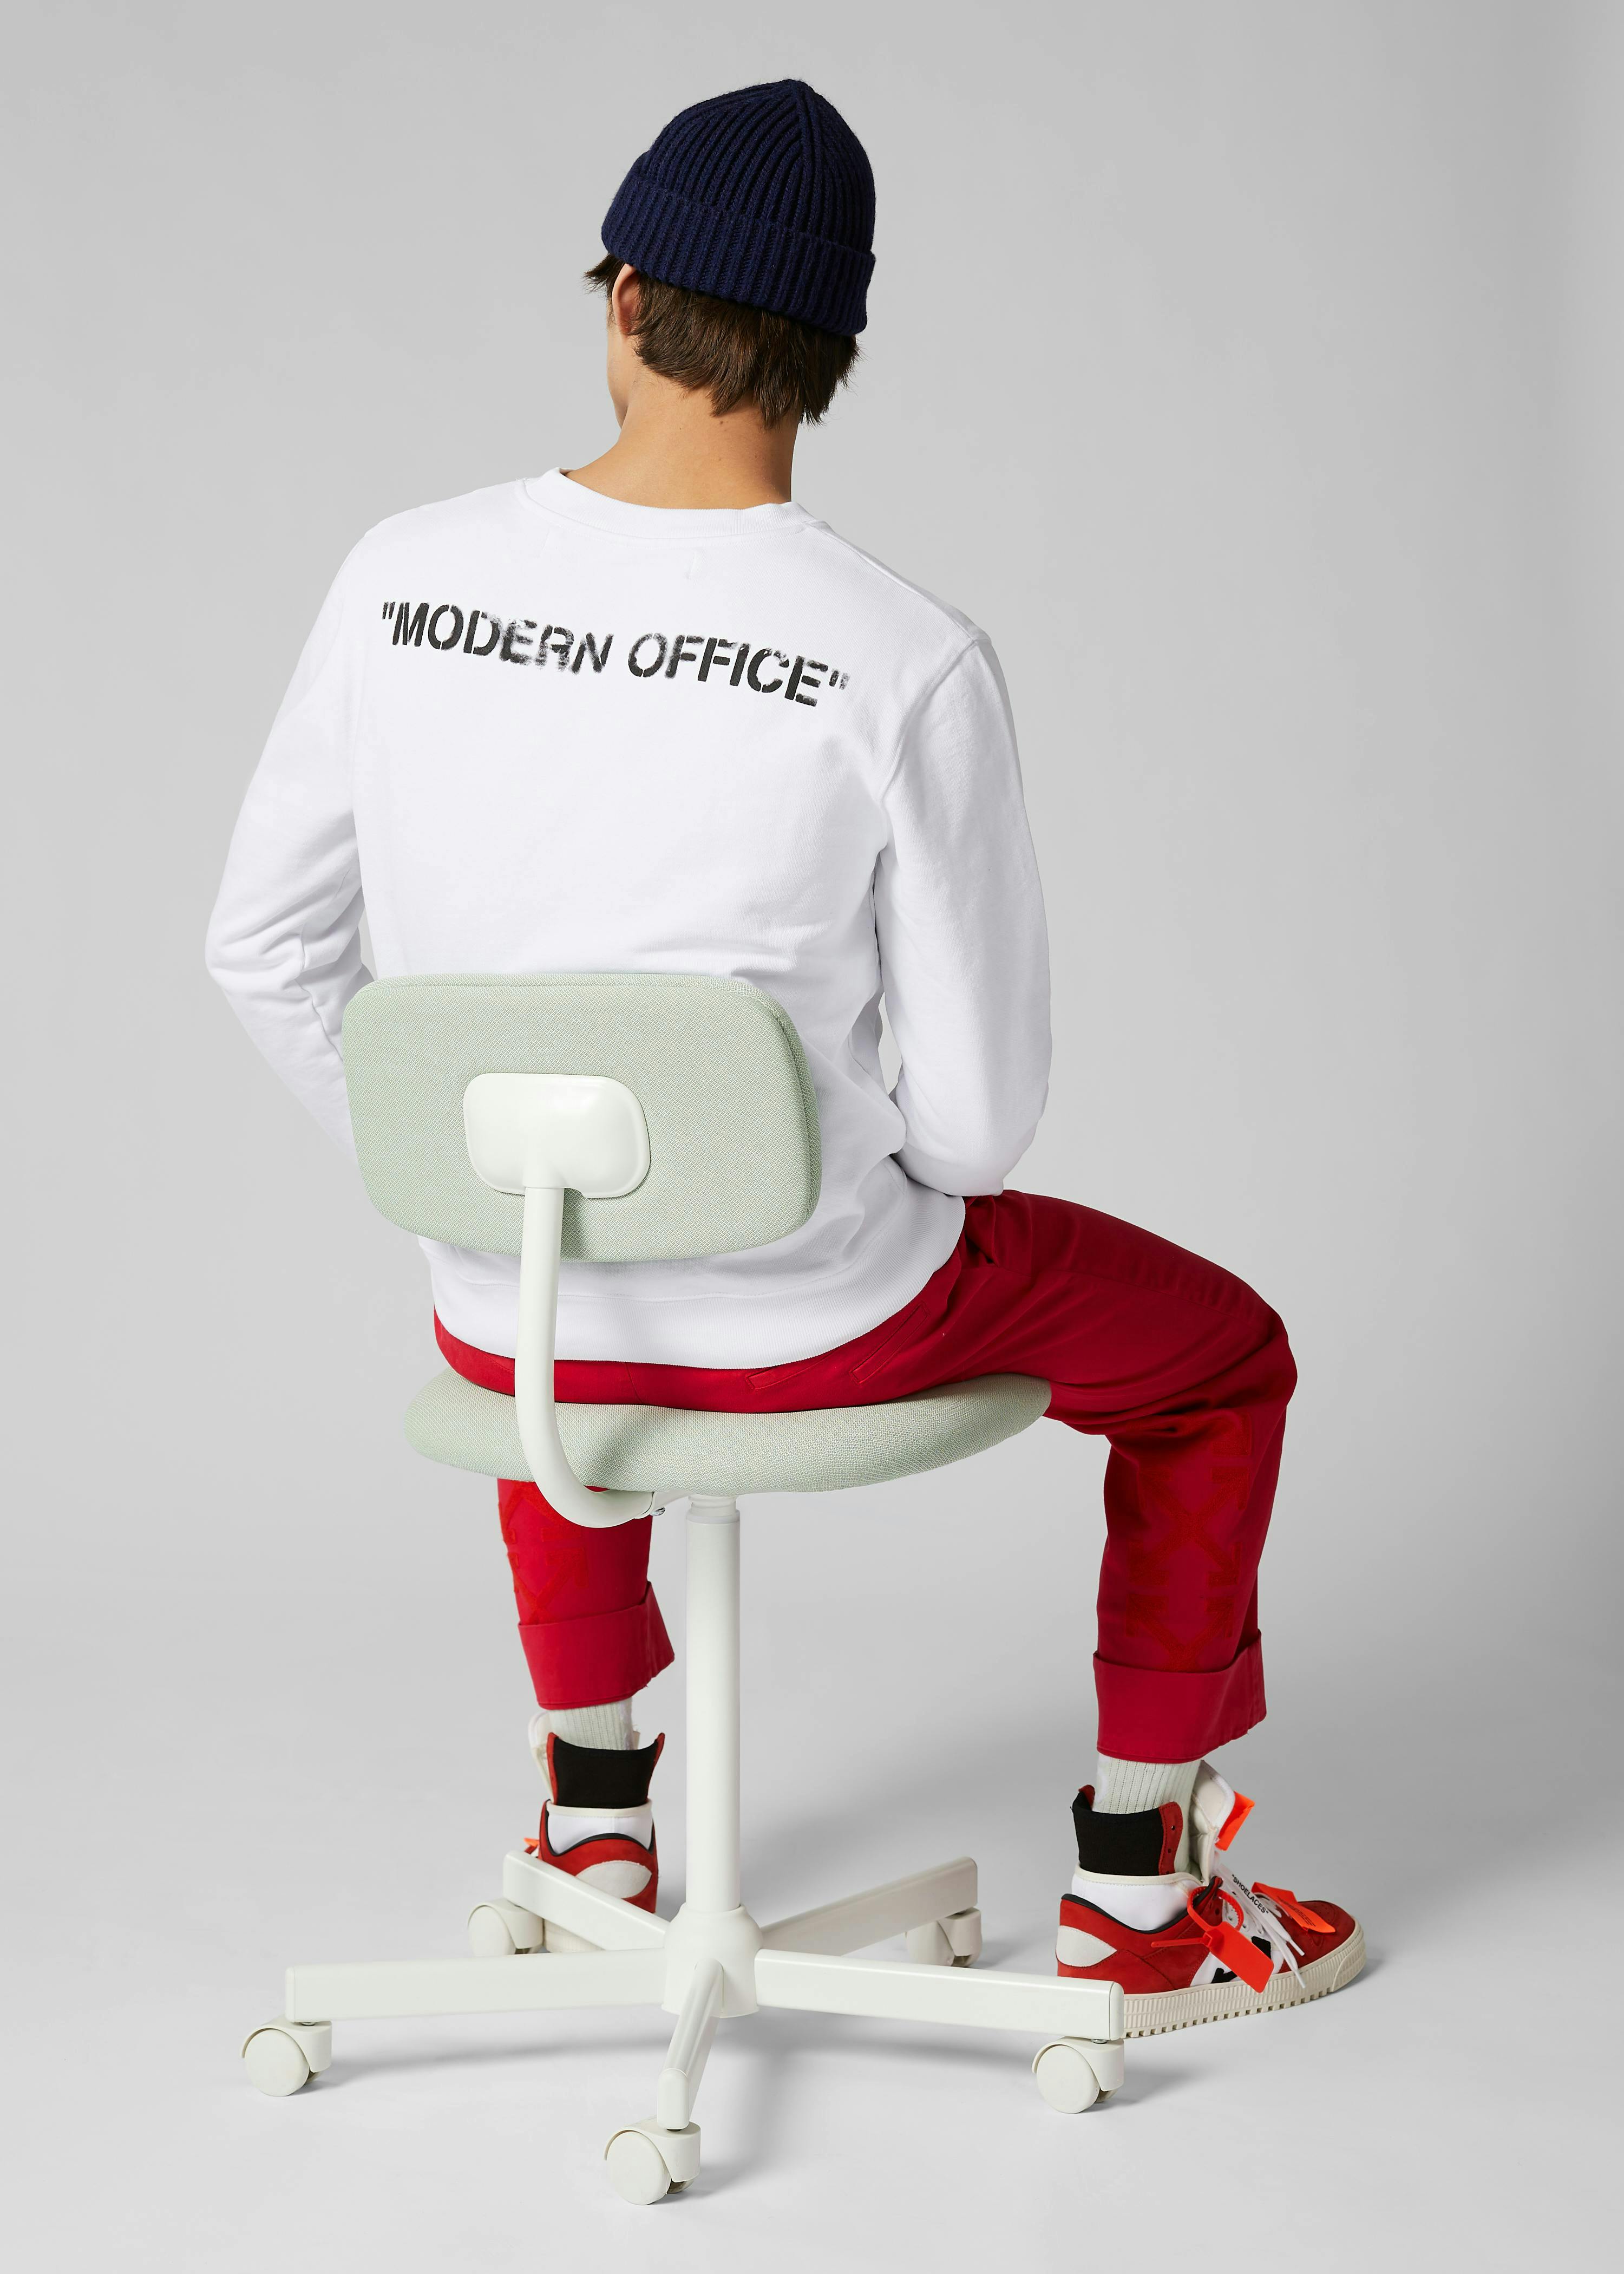 clothing apparel sleeve long sleeve person human chair furniture shoe footwear